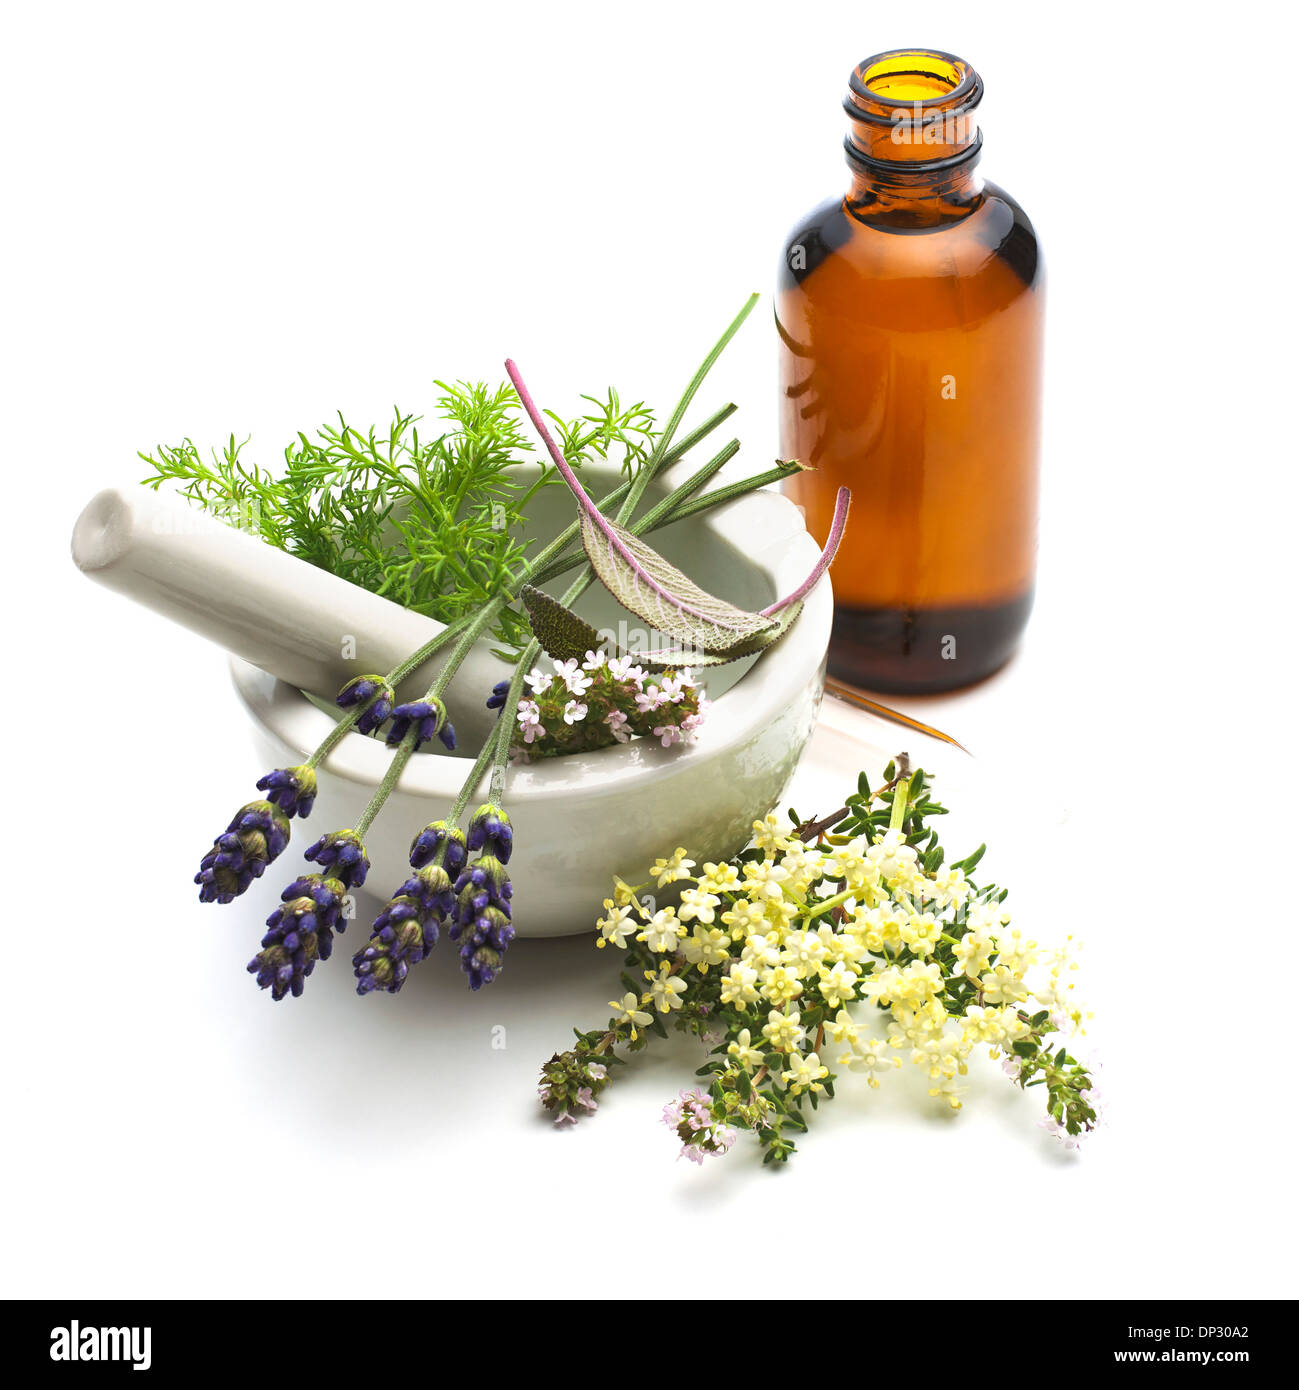 Medicinal plants, conceptual image Stock Photo